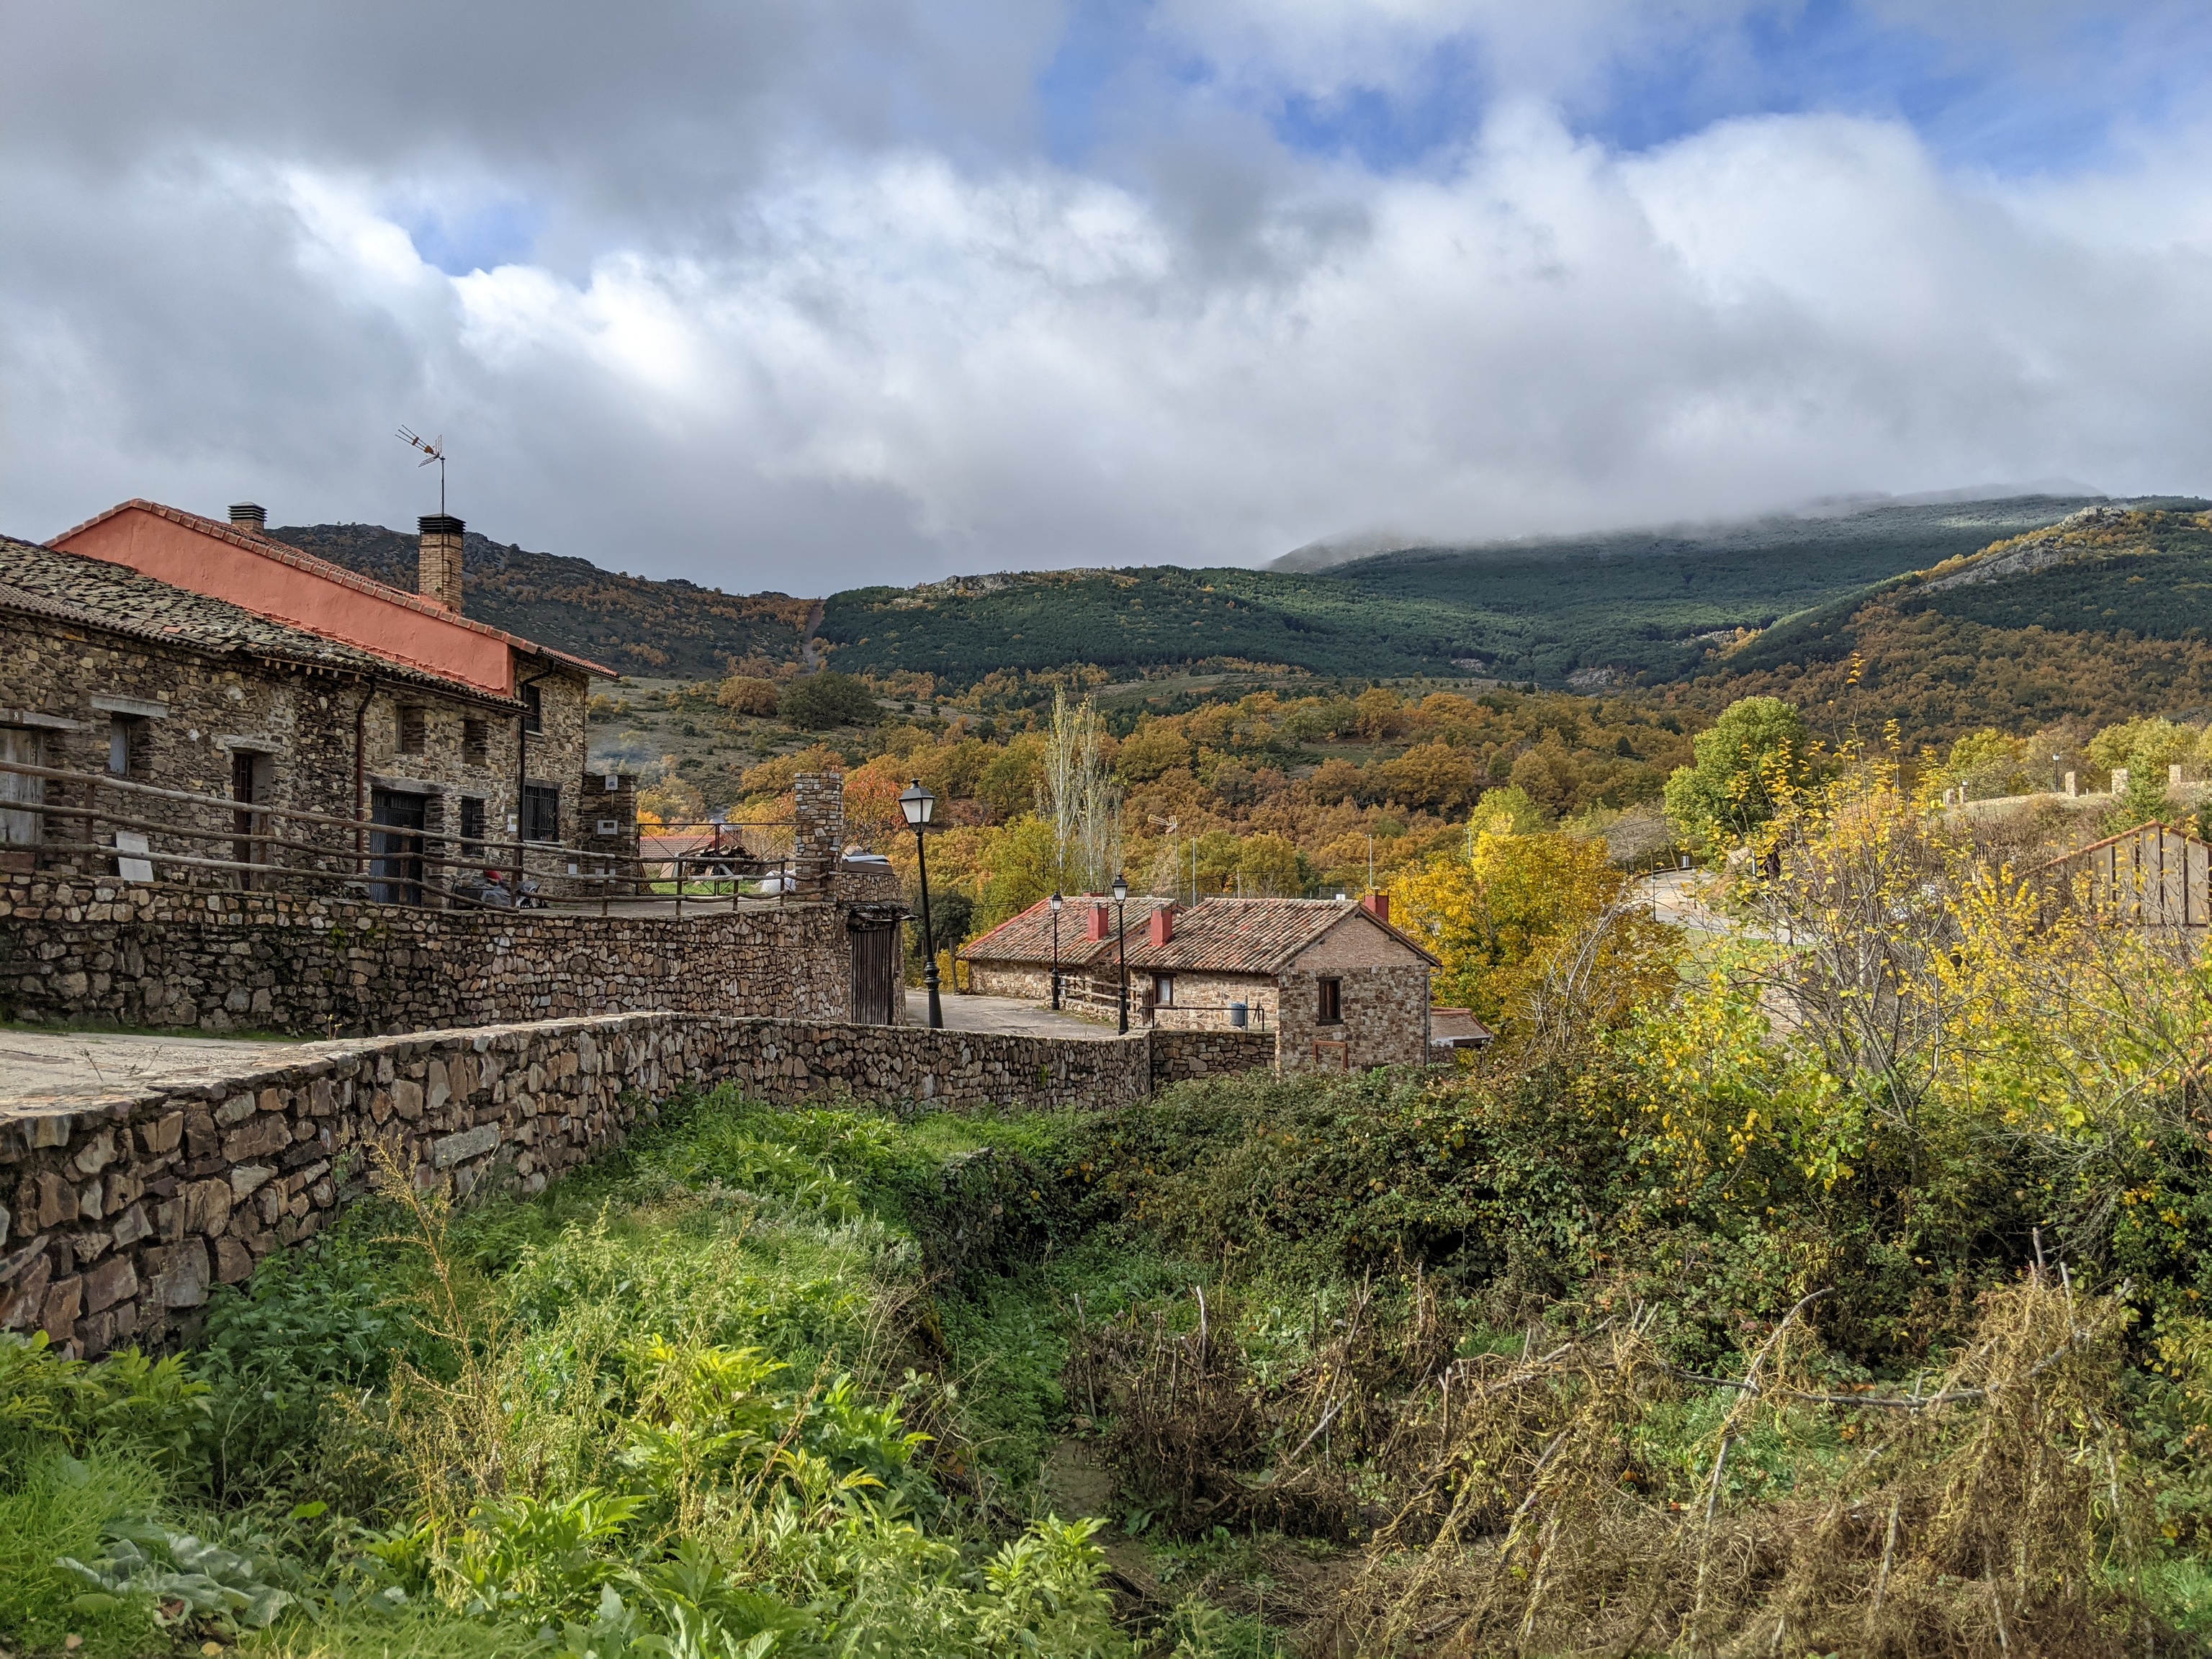 La aldea encajonada en el valle.